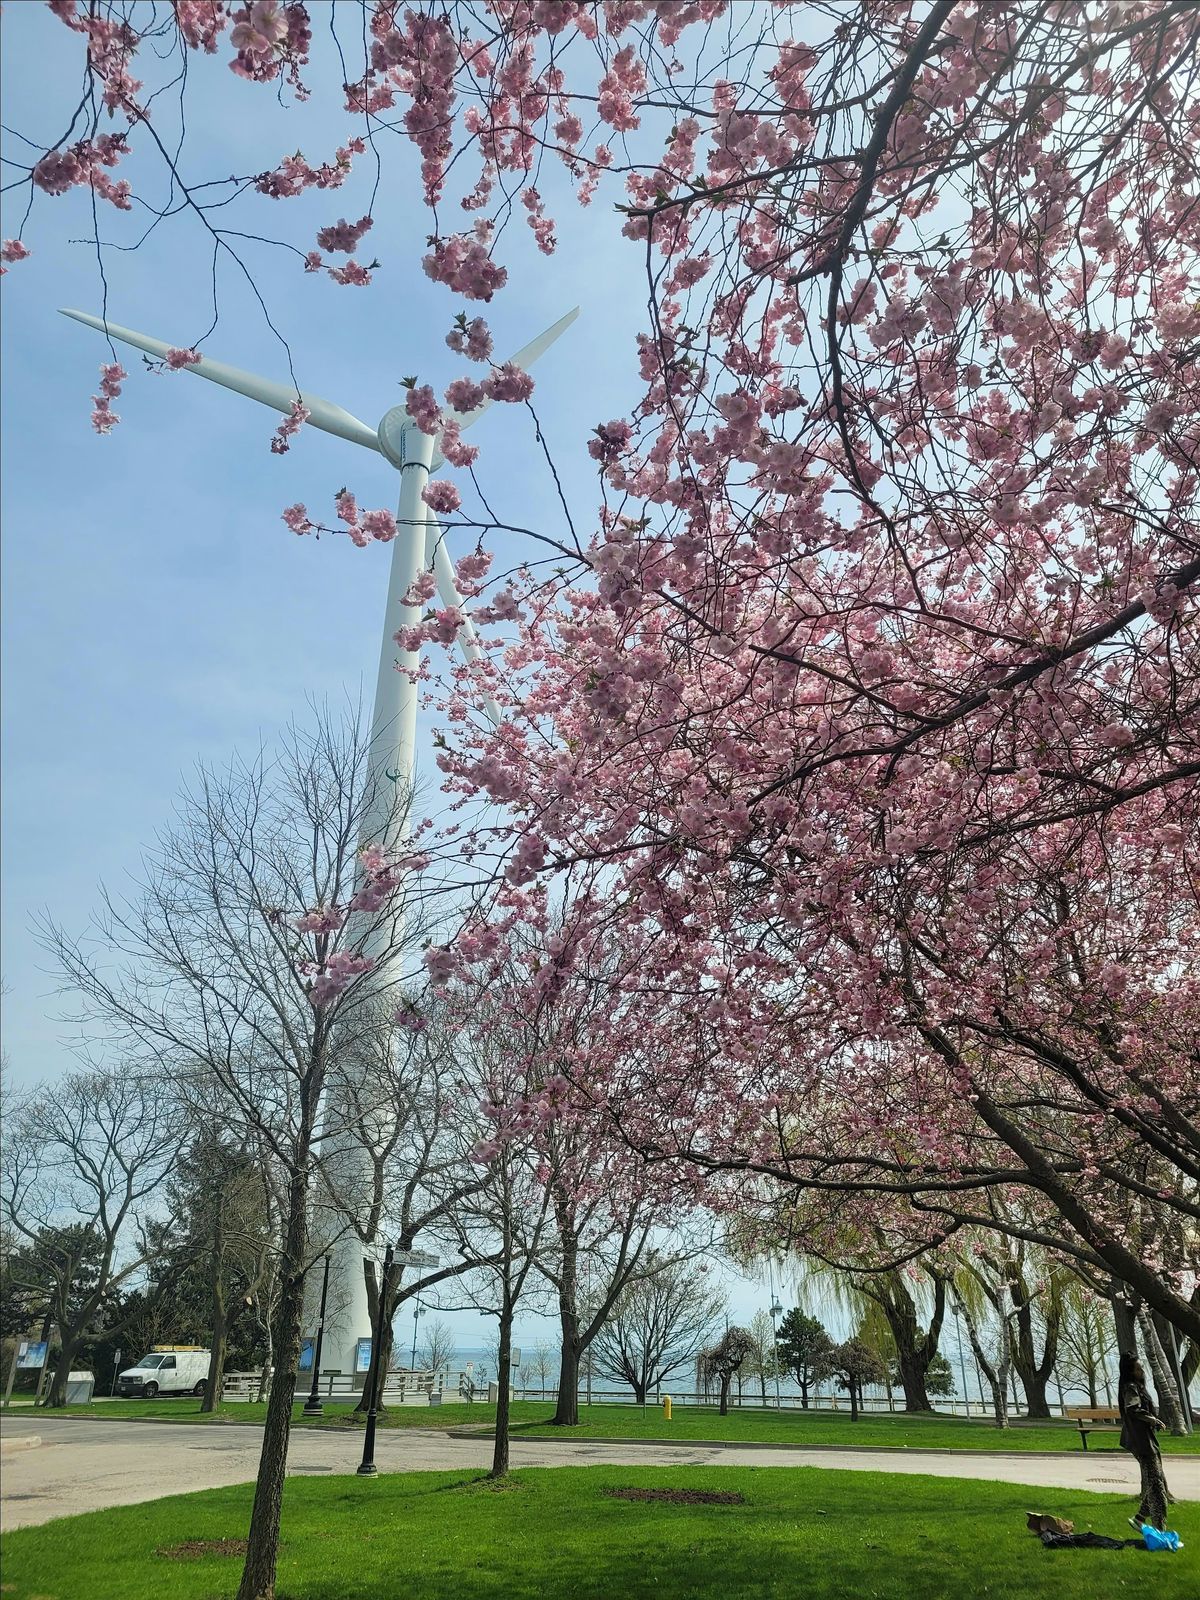 Sunset Cherry Blossoms Photo Walk (Intermediate Photographers)